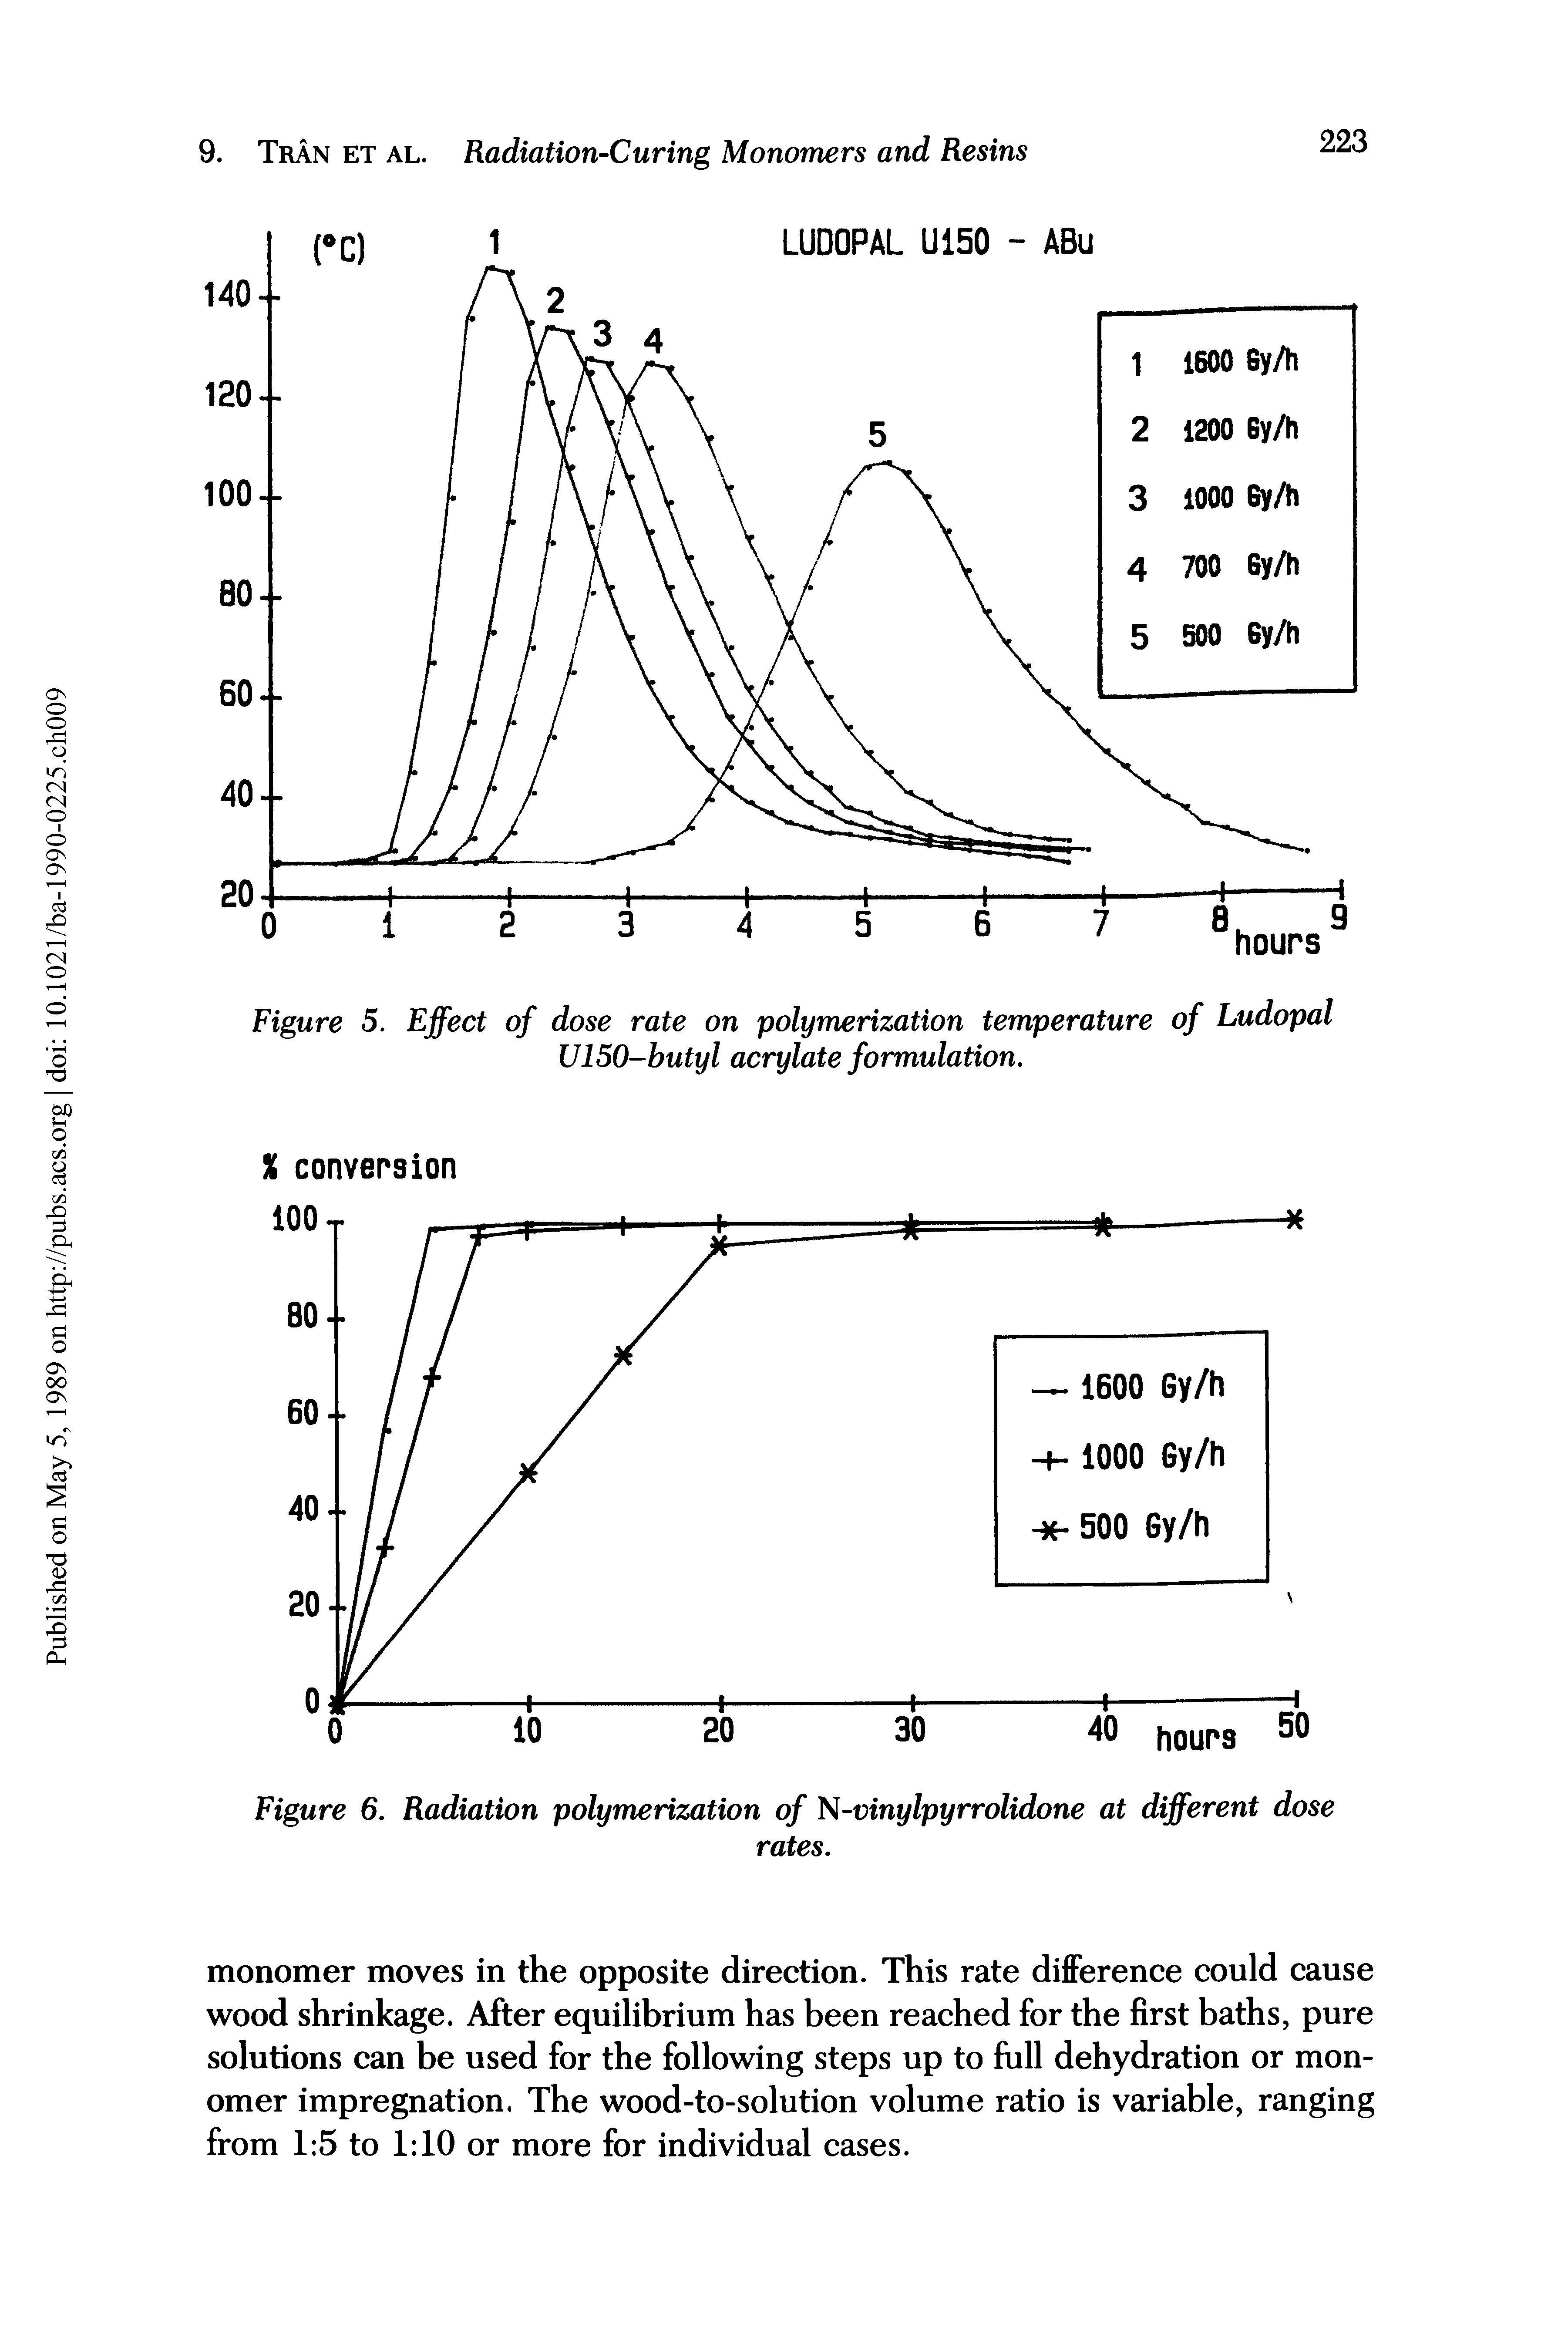 Figure 5. Effect of dose rate on polymerization temperature of Ludopal U150-butyl acrylate formulation.